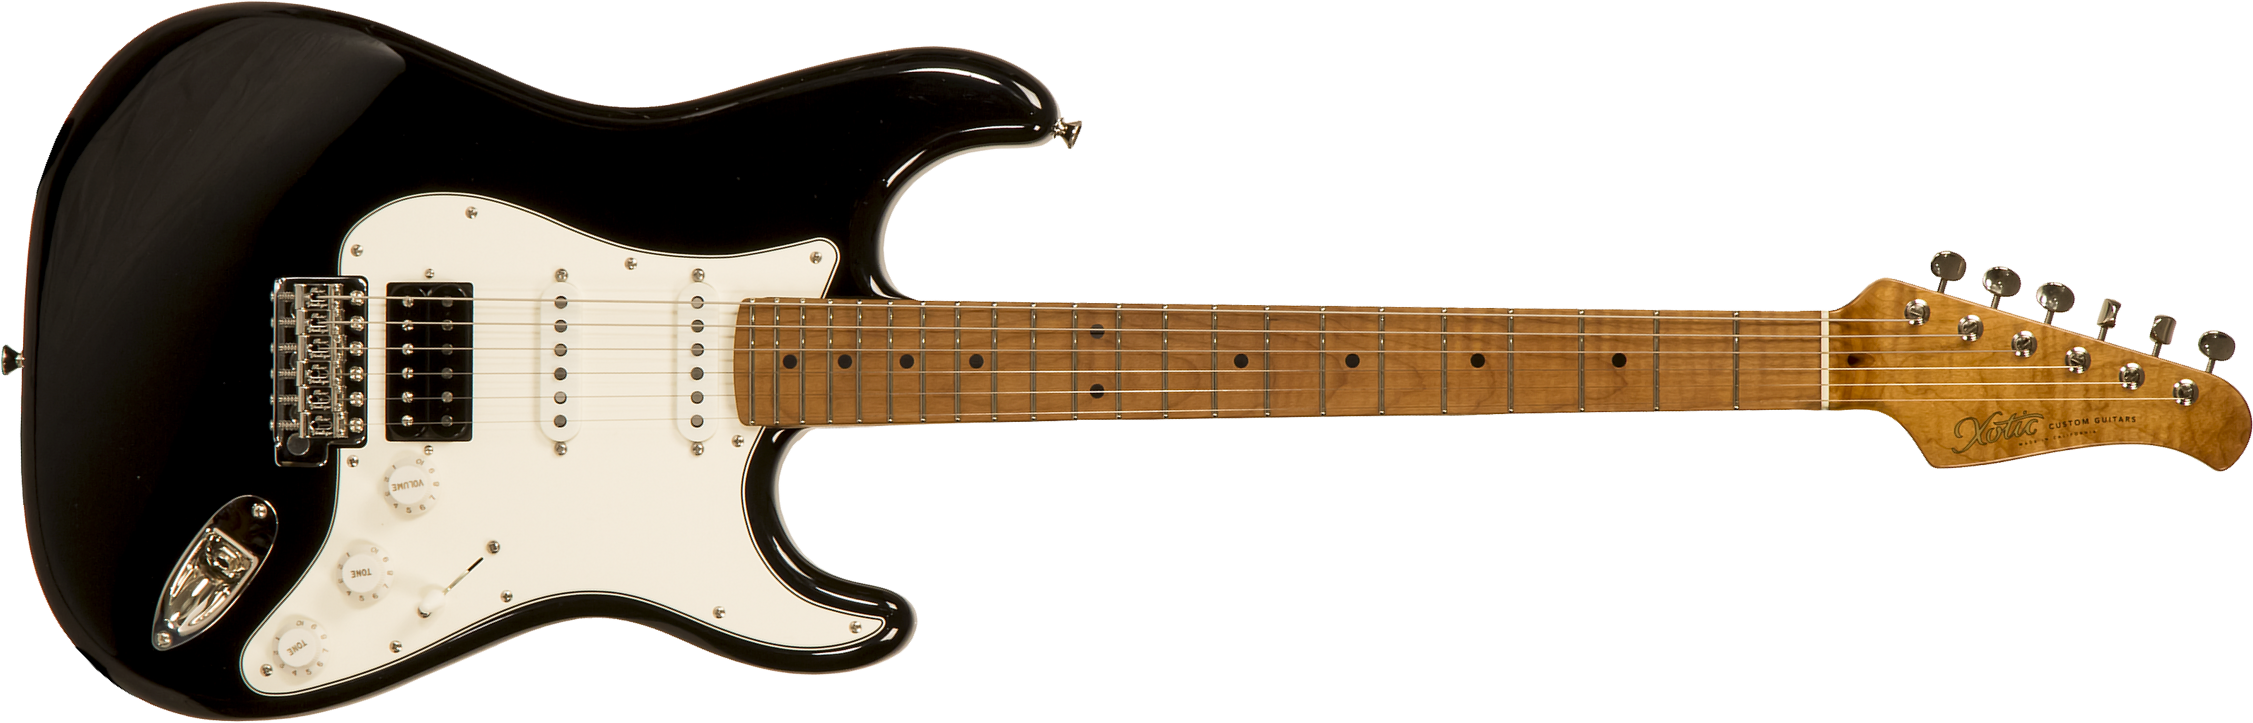 Xotic Xscpro-2 California Class Hss Mn #2113 - Light Aging Black - Str shape electric guitar - Main picture